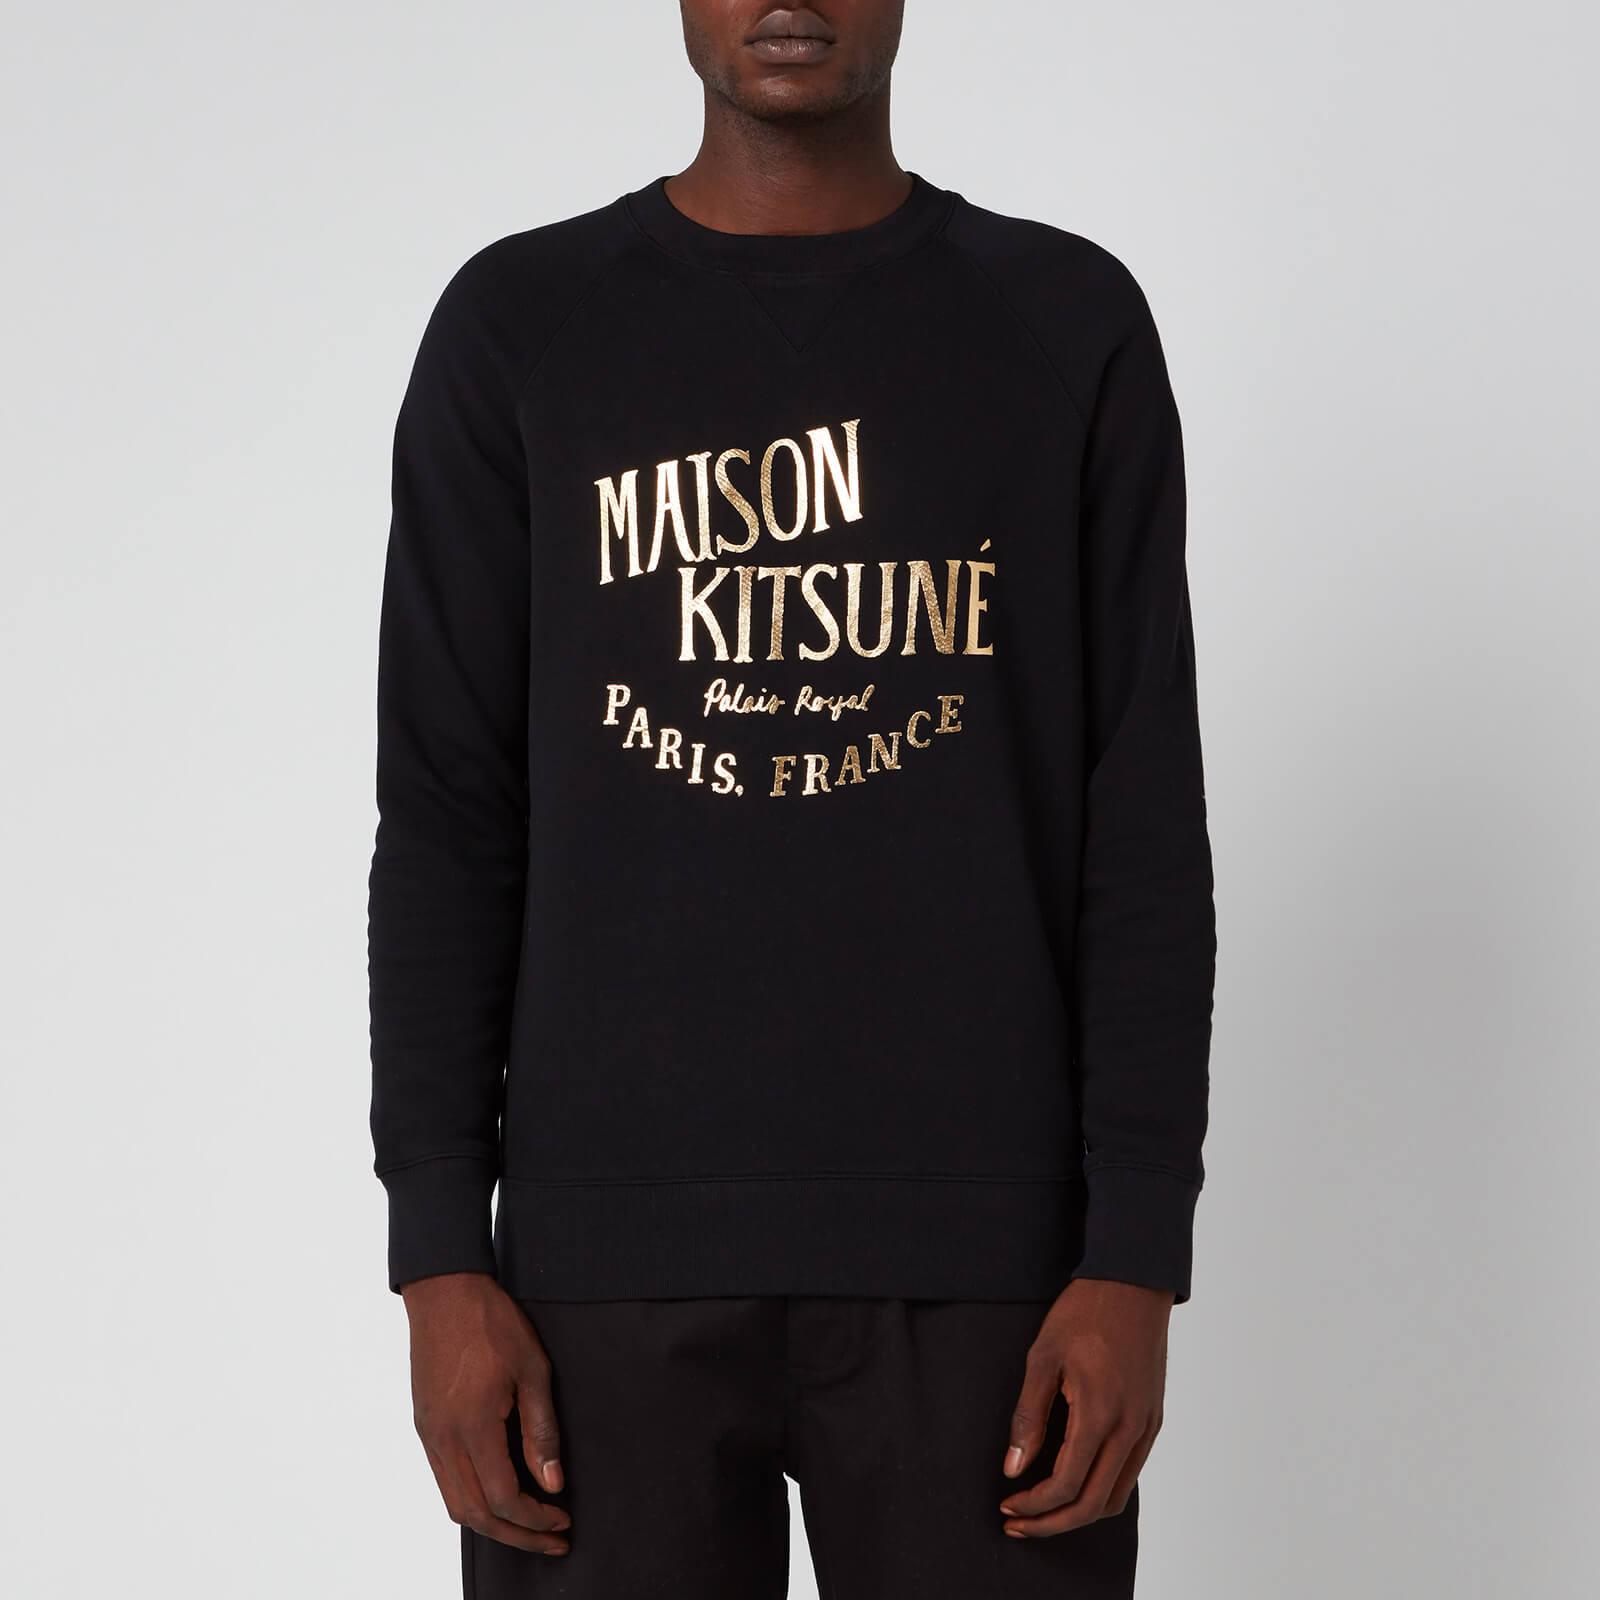 Maison Kitsuné Cotton Palais Royal Sweatshirt in Black for Men - Lyst